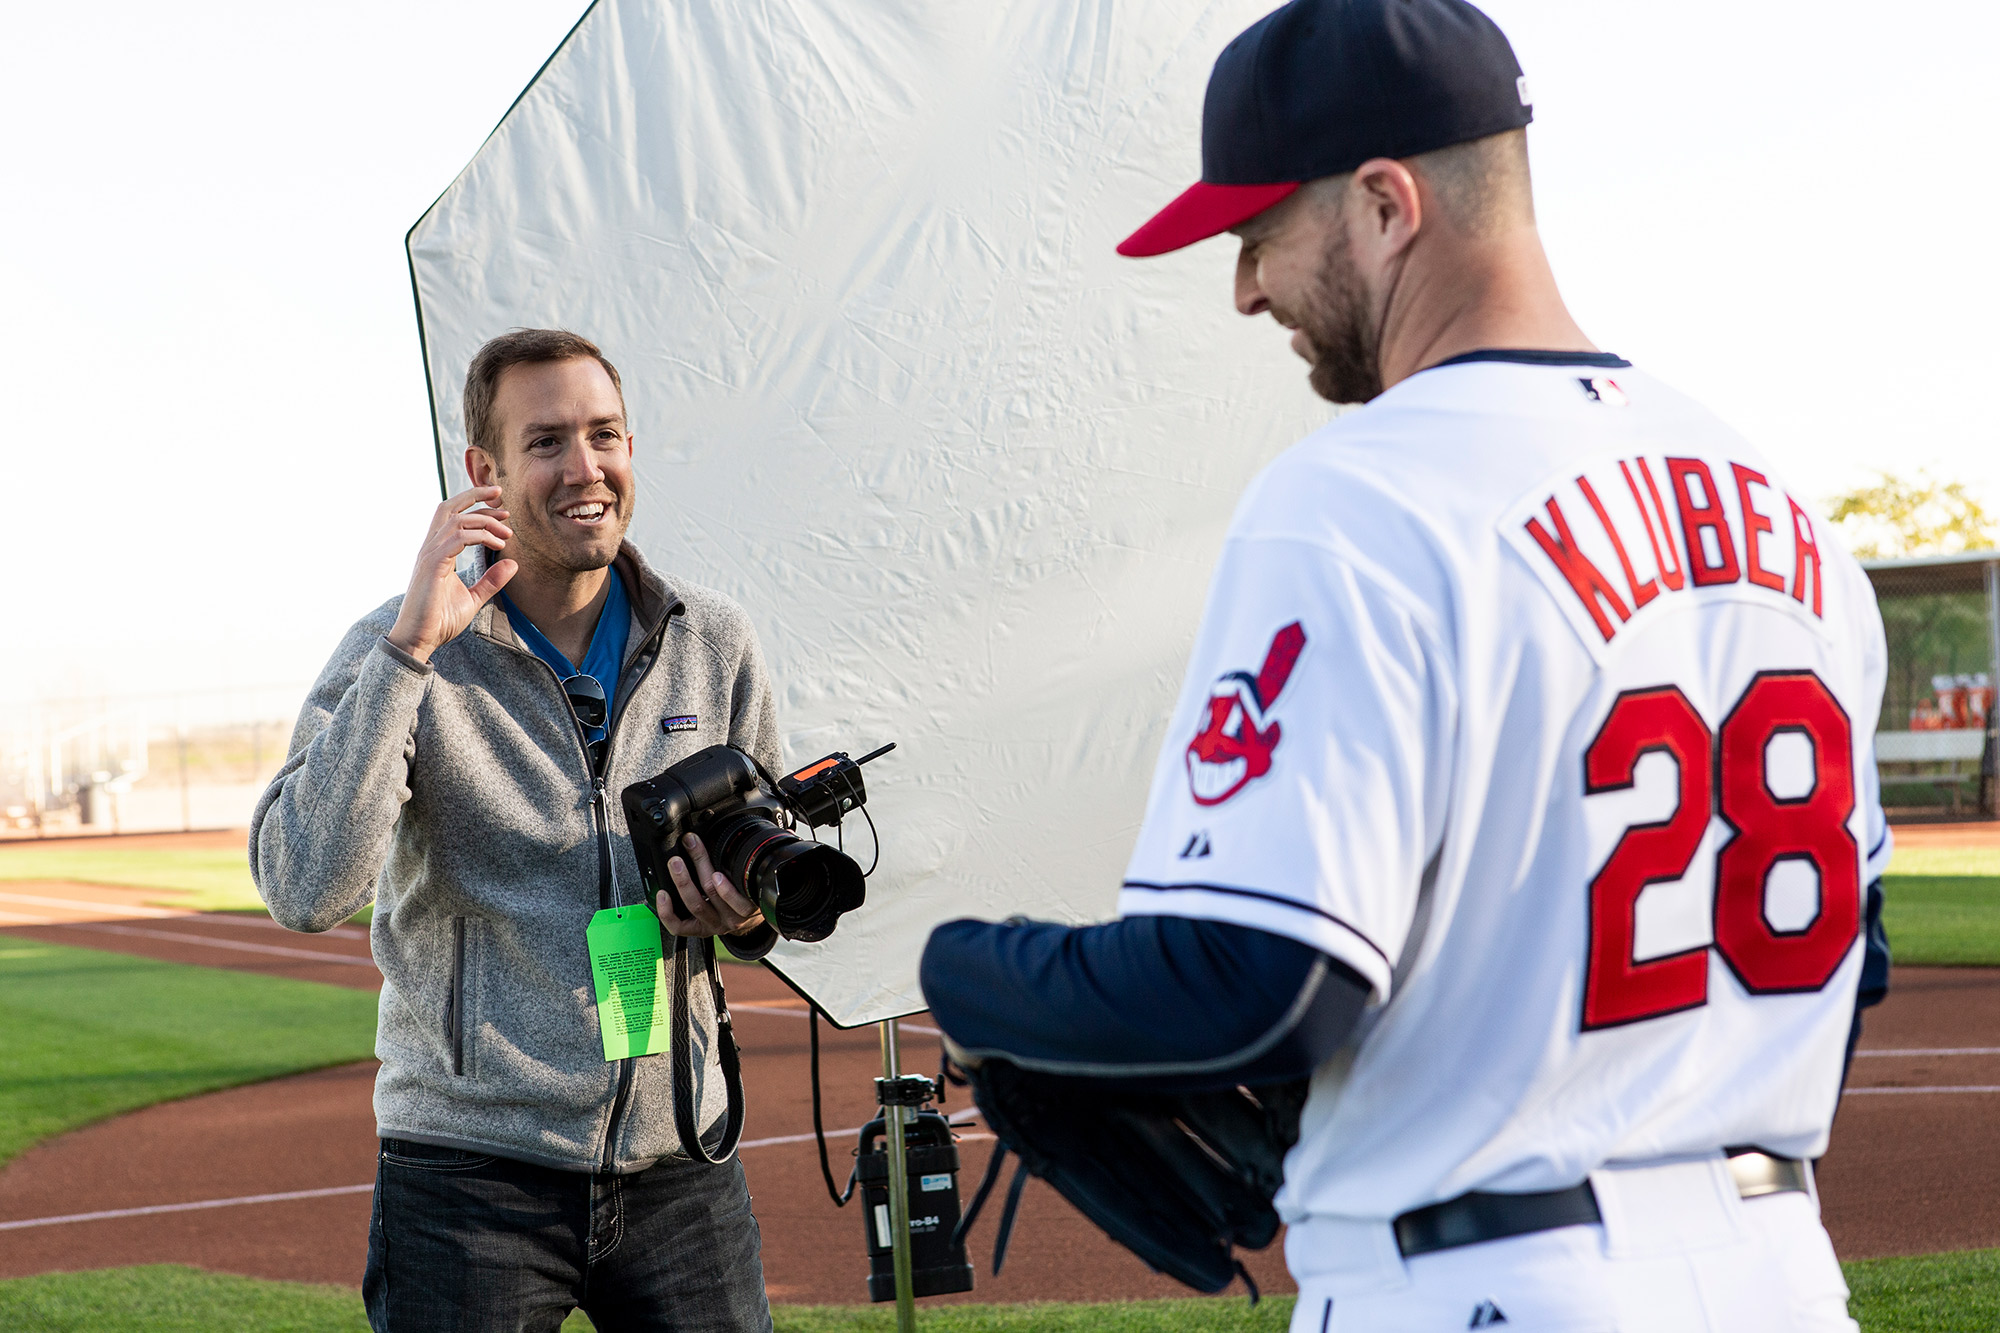 Philadelphia Sports Photographer Steve Boyle  - Behind the Scenes Photoshoot - Major League Baseball